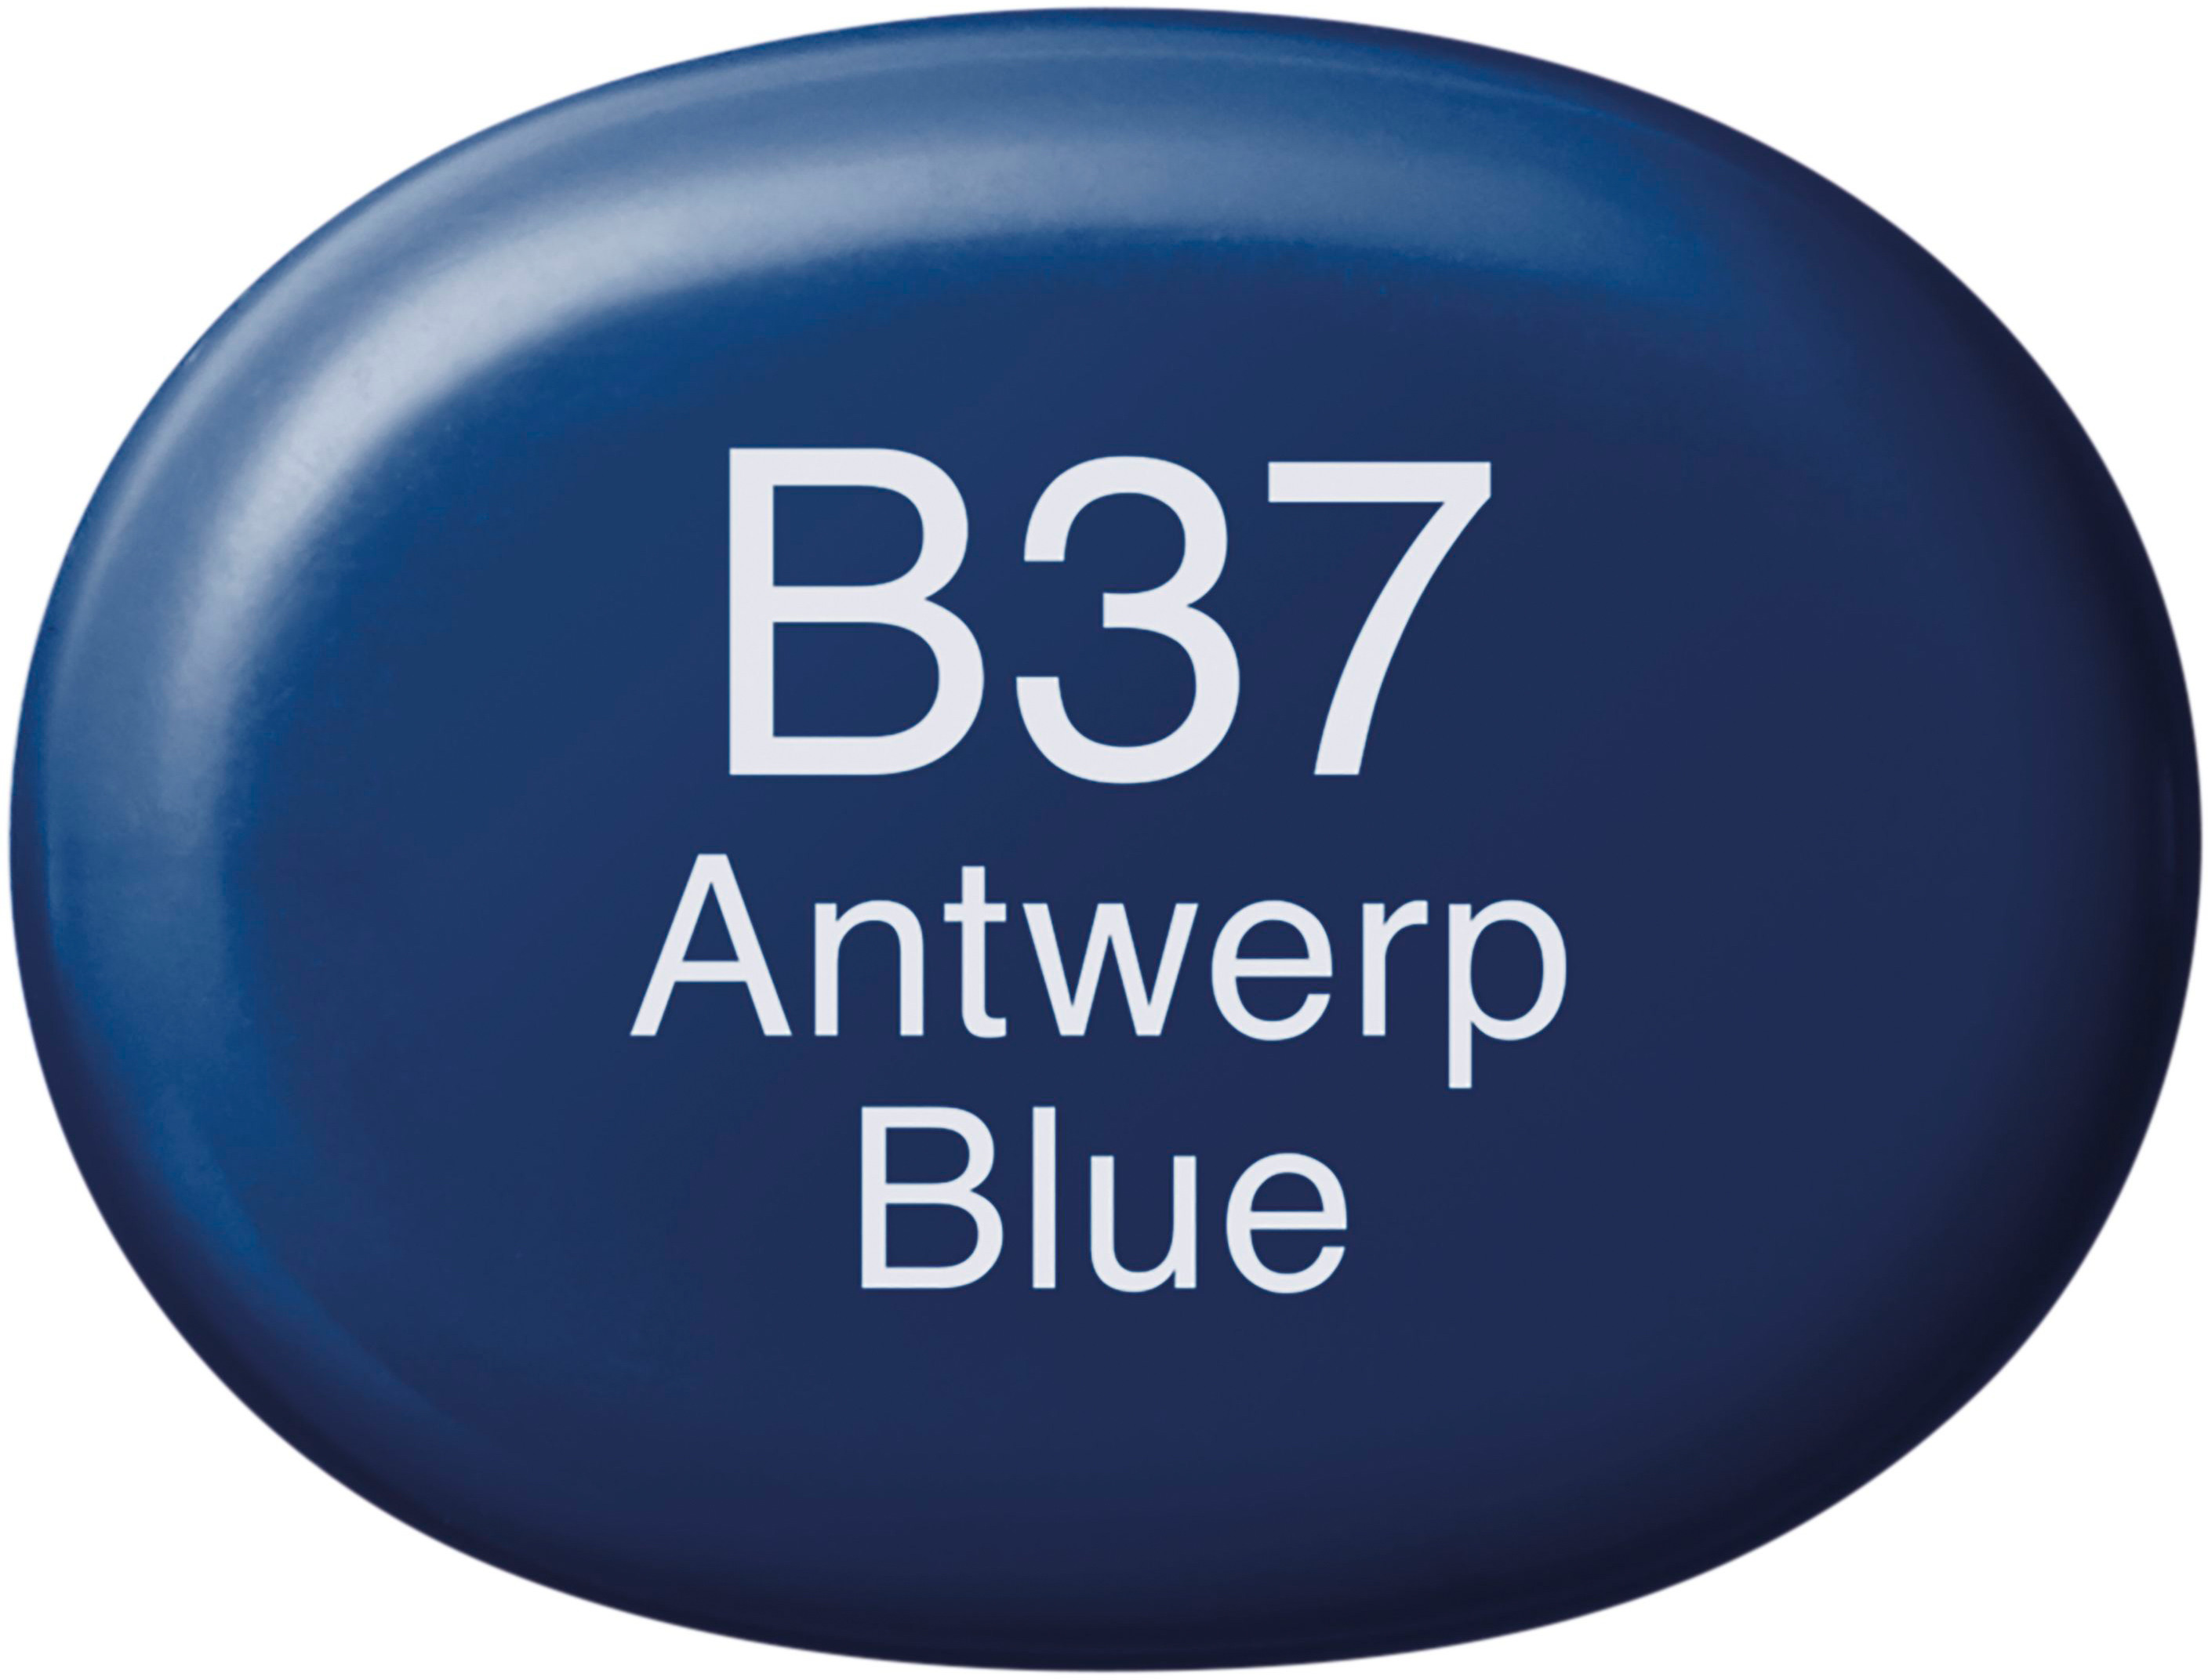 COPIC Marker Sketch 2107577 B37 - Antwerp Blue